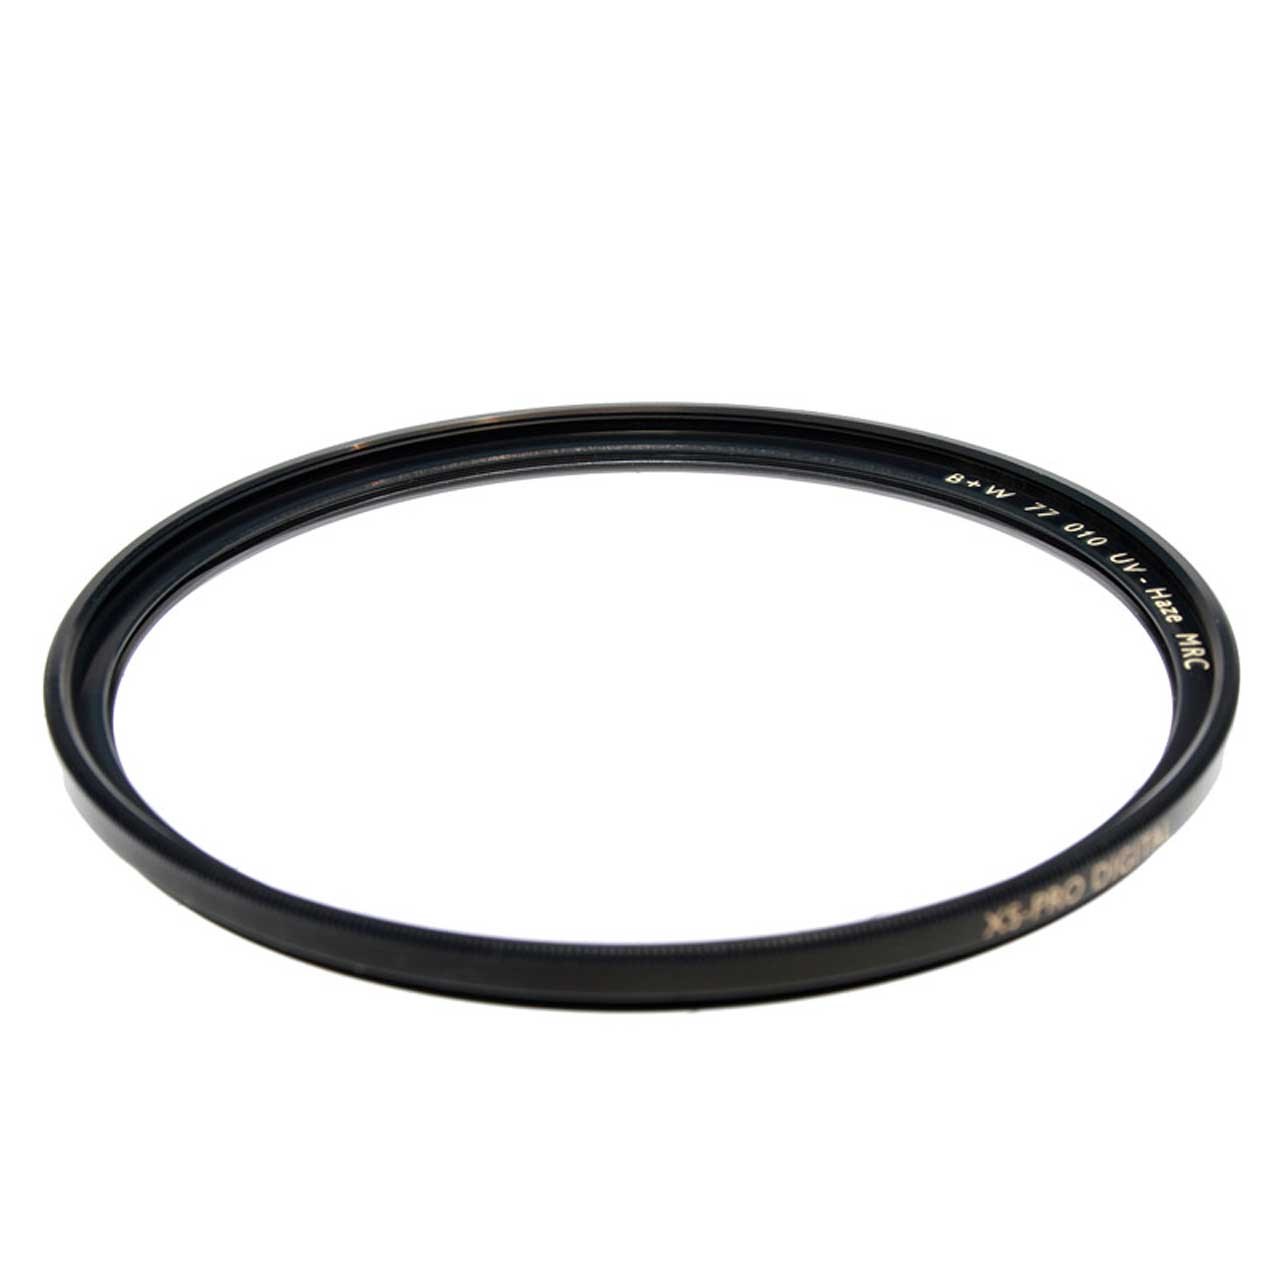 فیلتر لنز پولاریزه بی دبلیو مدل Circular-Pol 82 mm